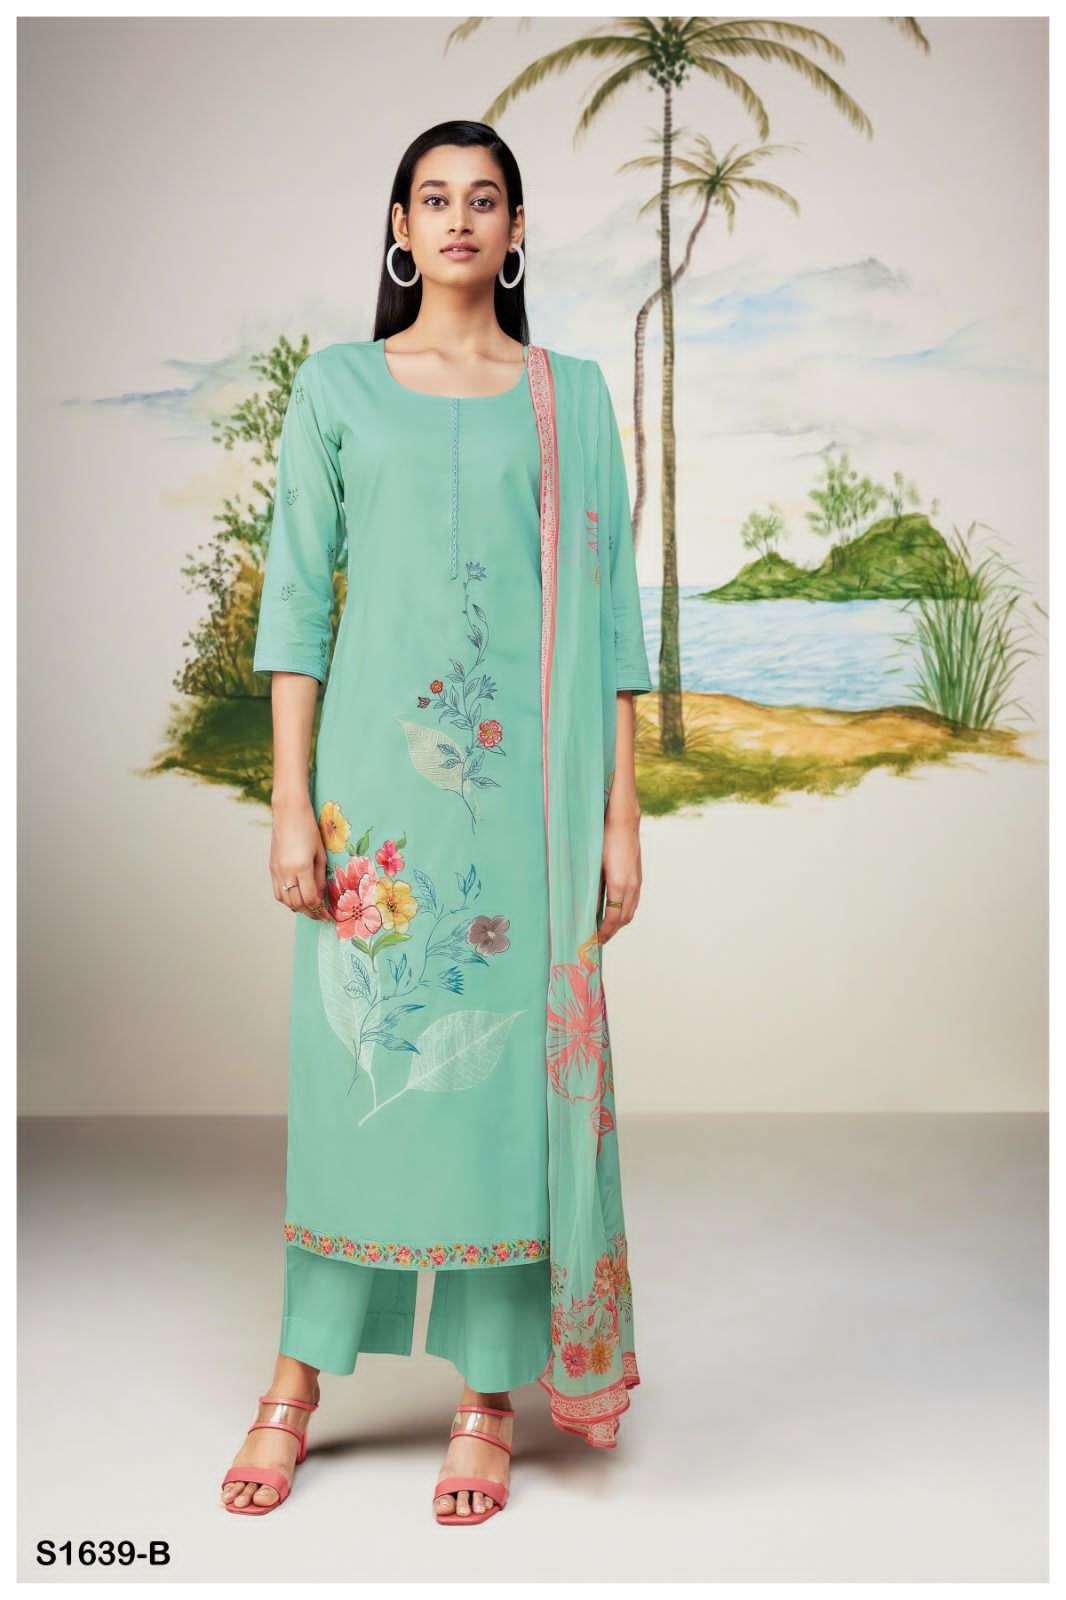 ganga rekha 1639 series premium cotton designer salwar kameez catalogue manufacturer surat